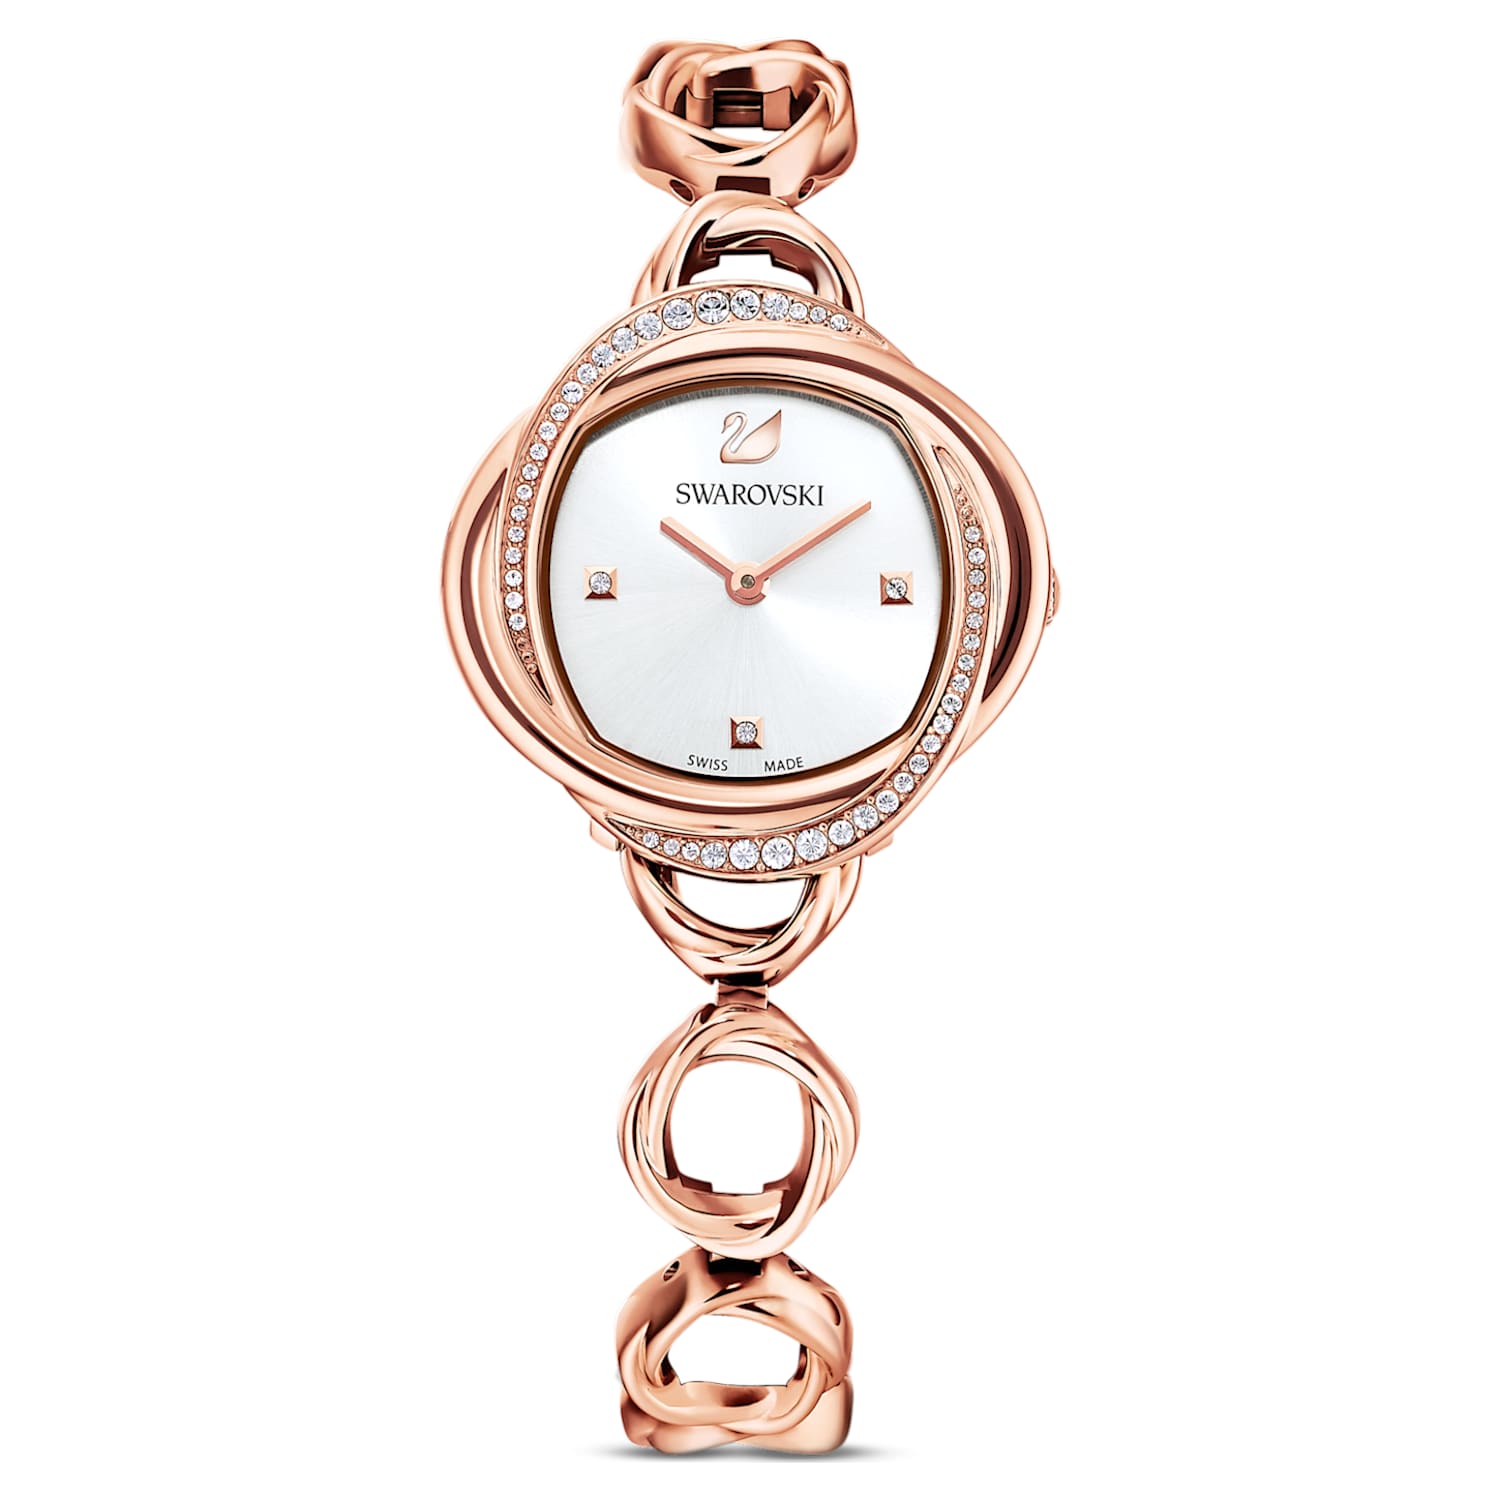 Aggregate more than 78 swarovski watch and bracelet set super hot - in ...